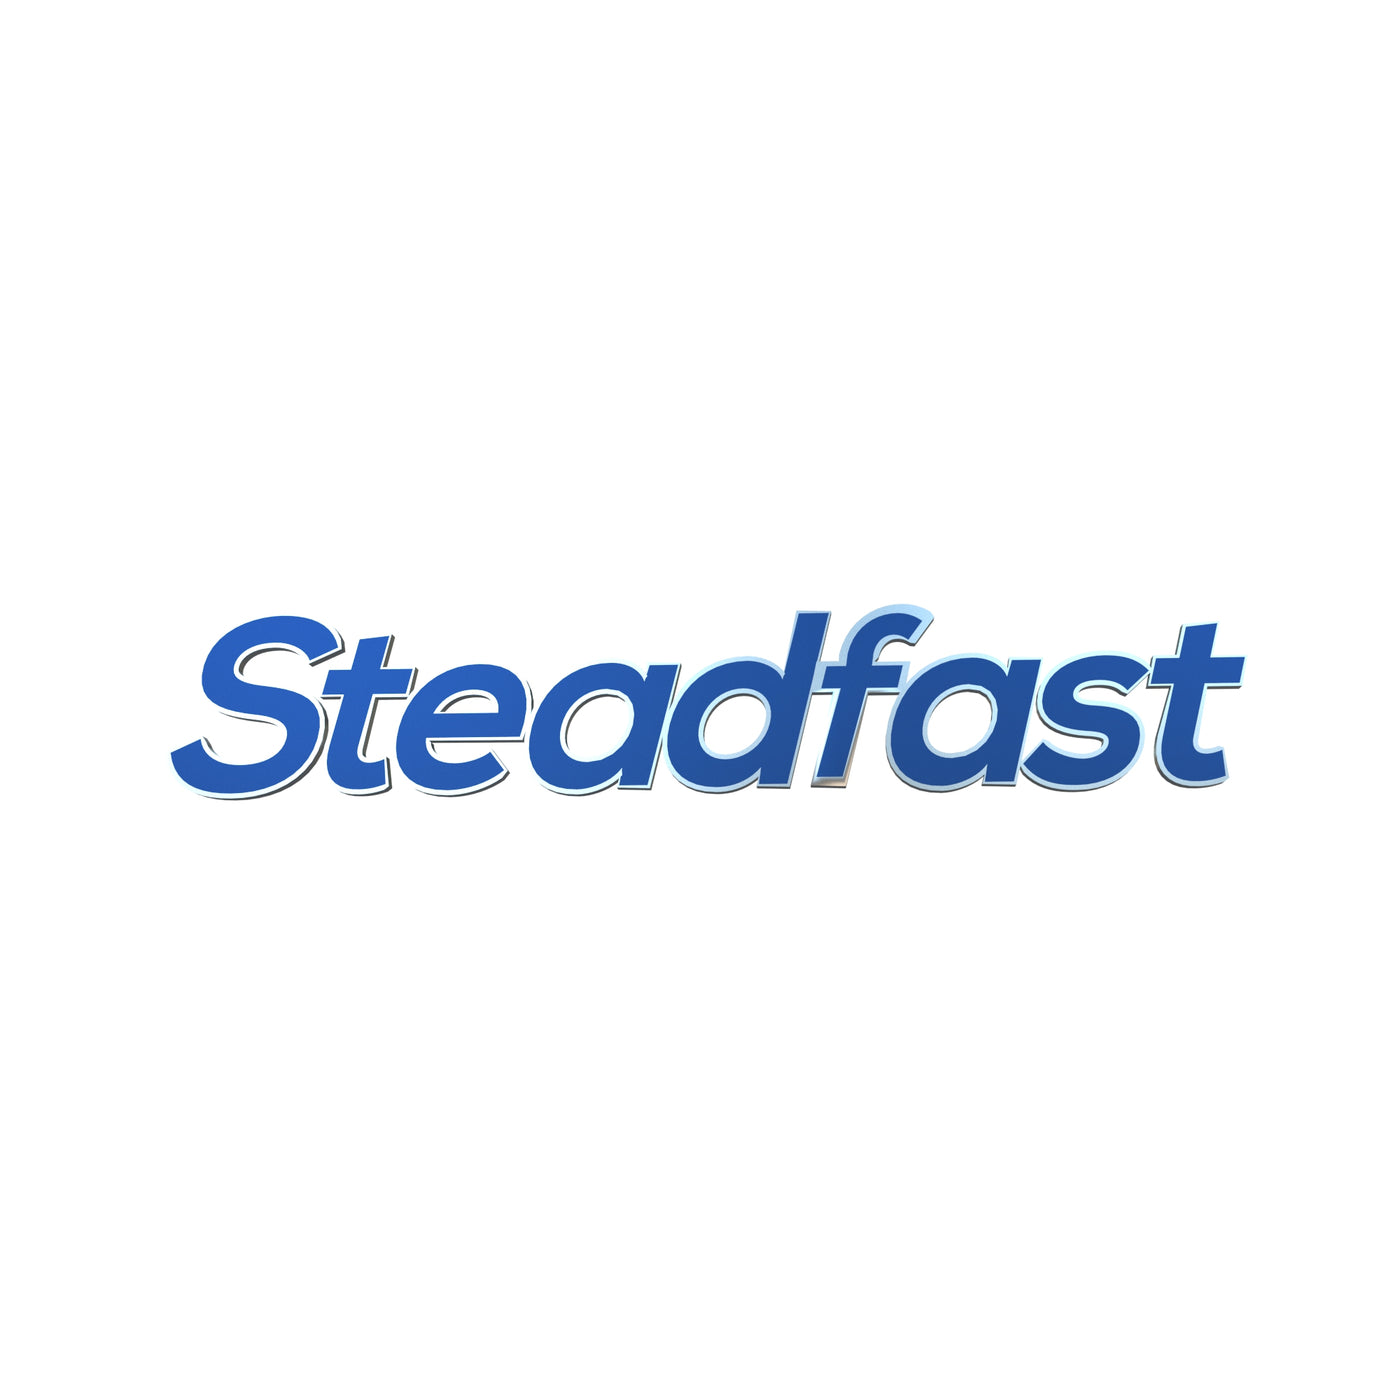 Steadfast Badge